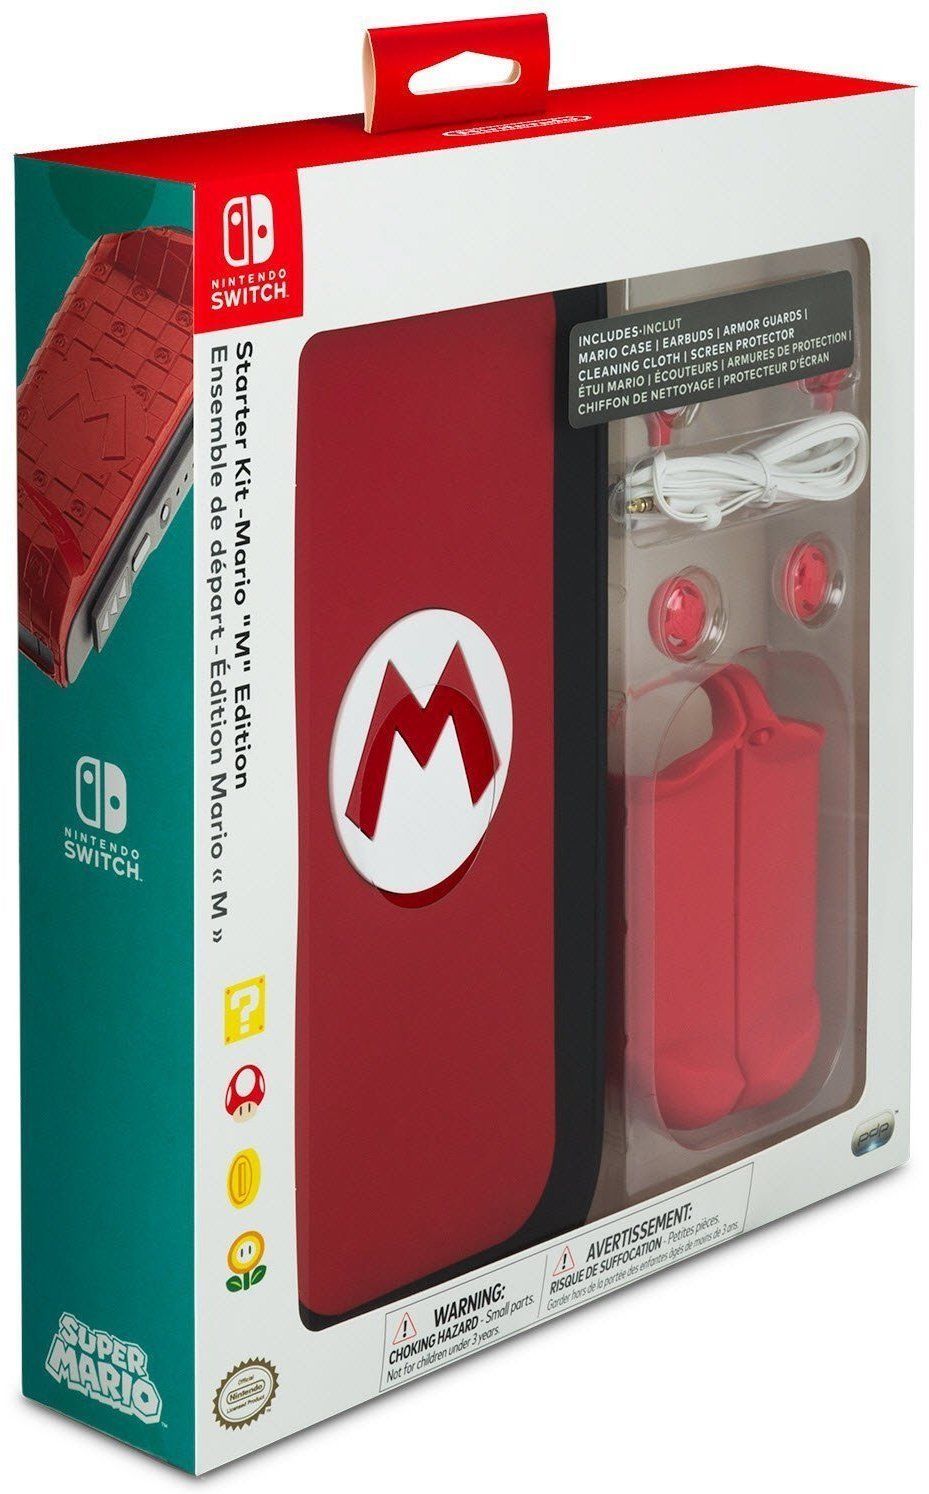 Nintendo Switch Starter Kit - Mario 'M' Edition Nintendo PDP - $33.61